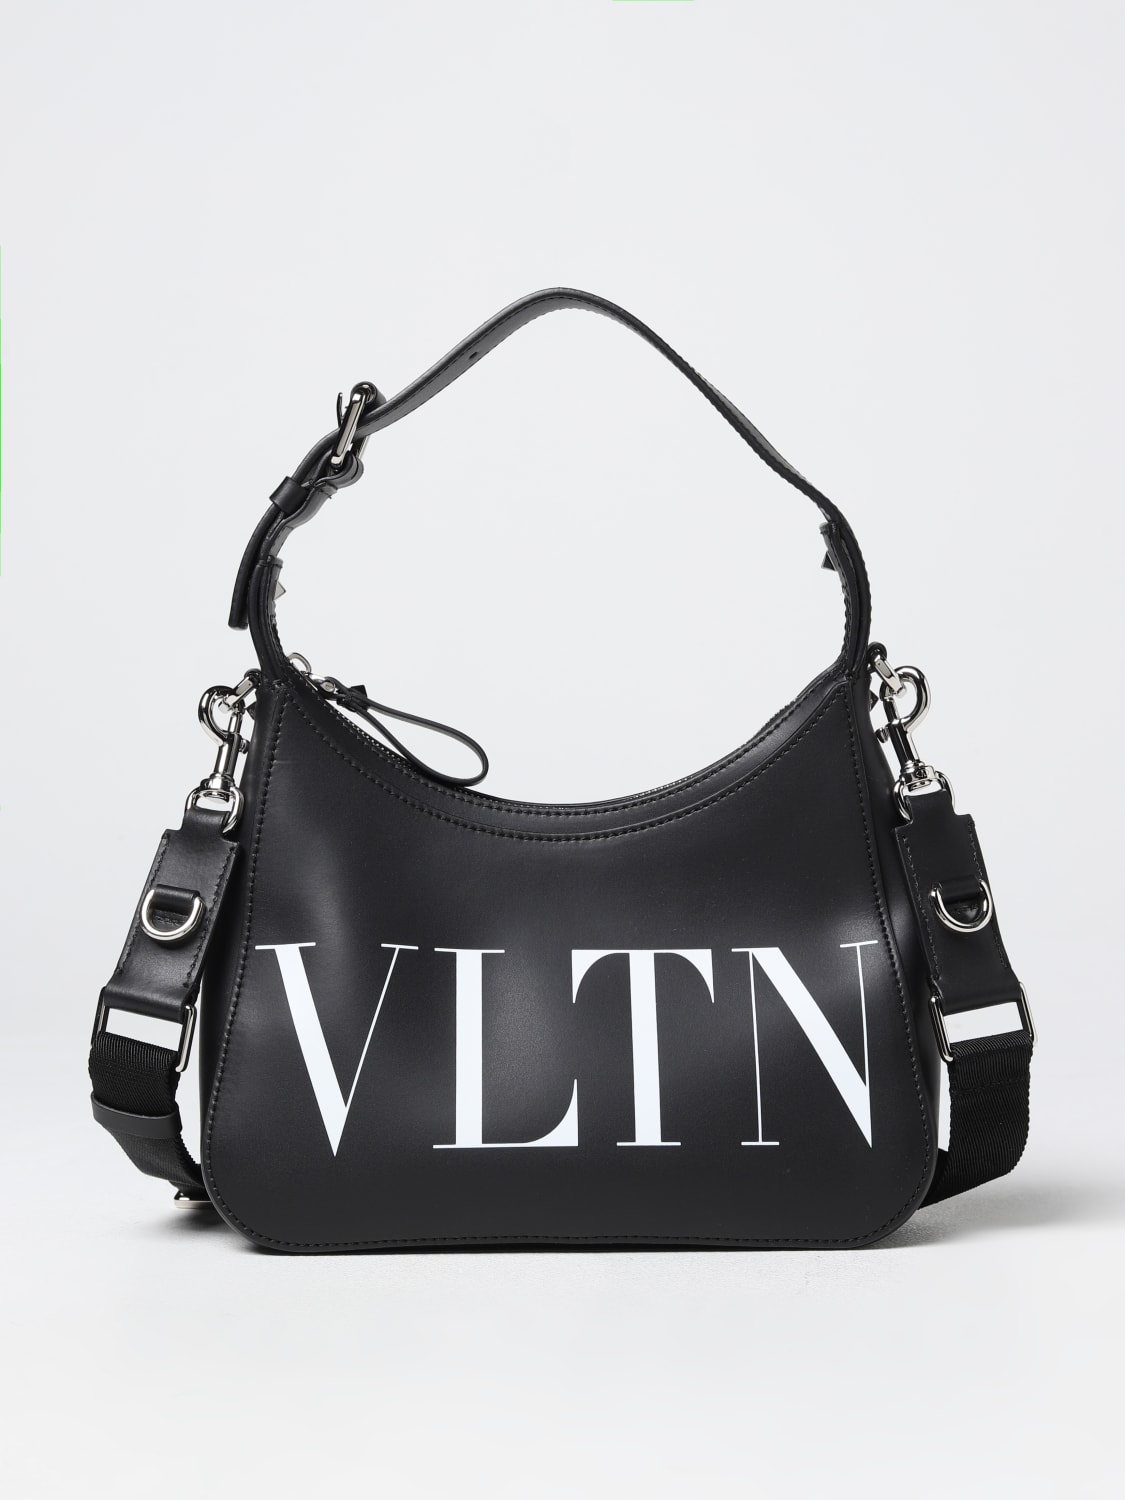 GARAVANI: VLTN leather bag Black | Valentino bags 1Y2B0B62WJW online GIGLIO.COM